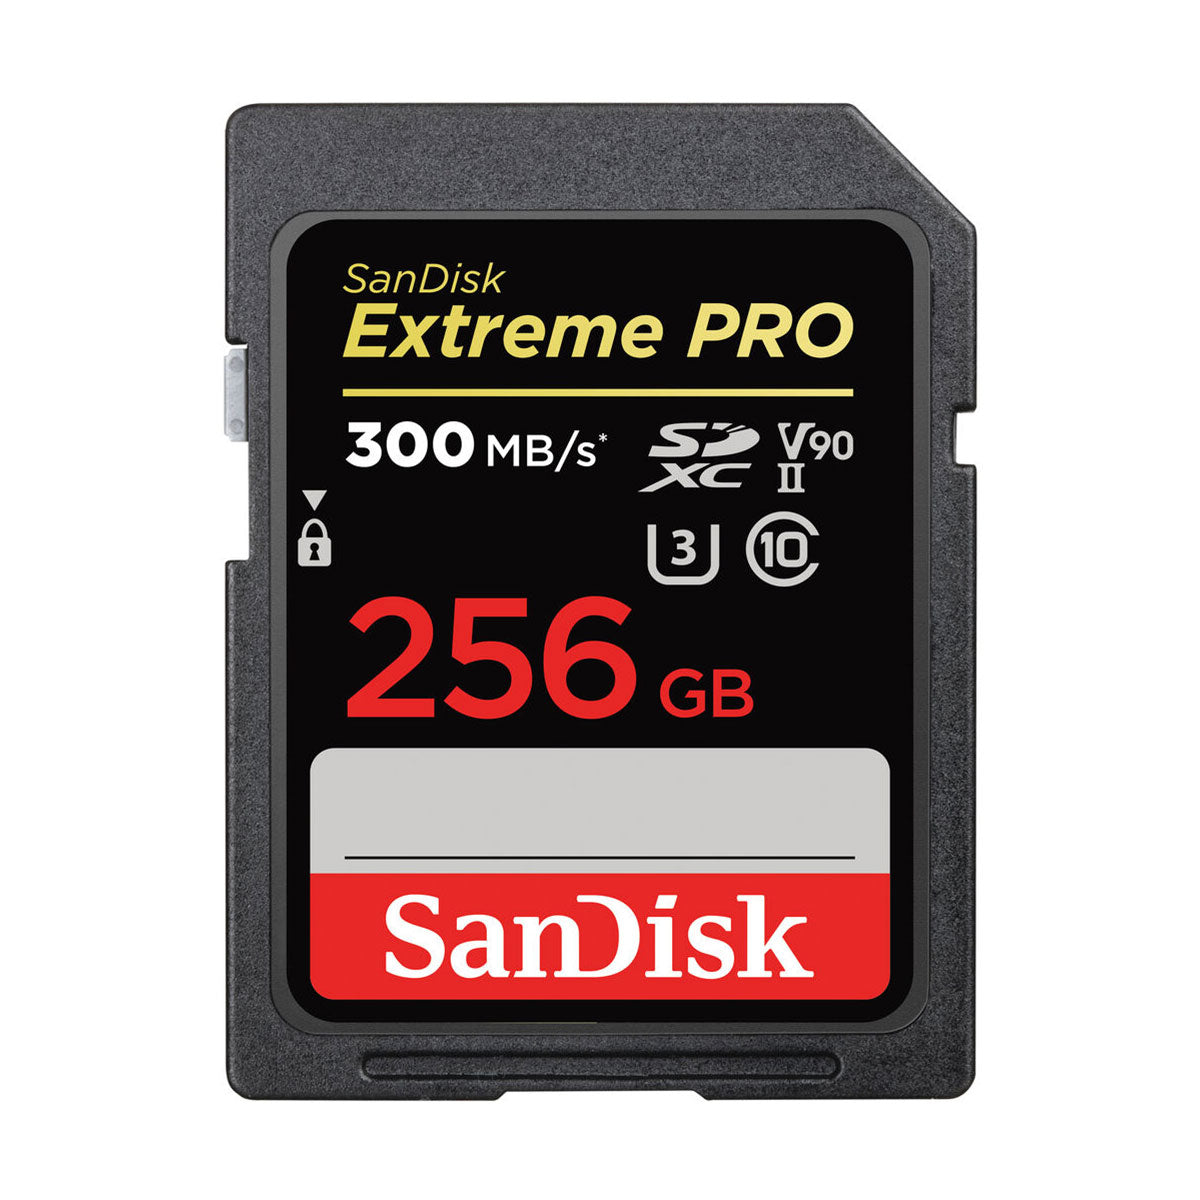 SanDisk 256GB Extreme PRO UHS-II SDXC (V90) Memory Card 300 MB/s